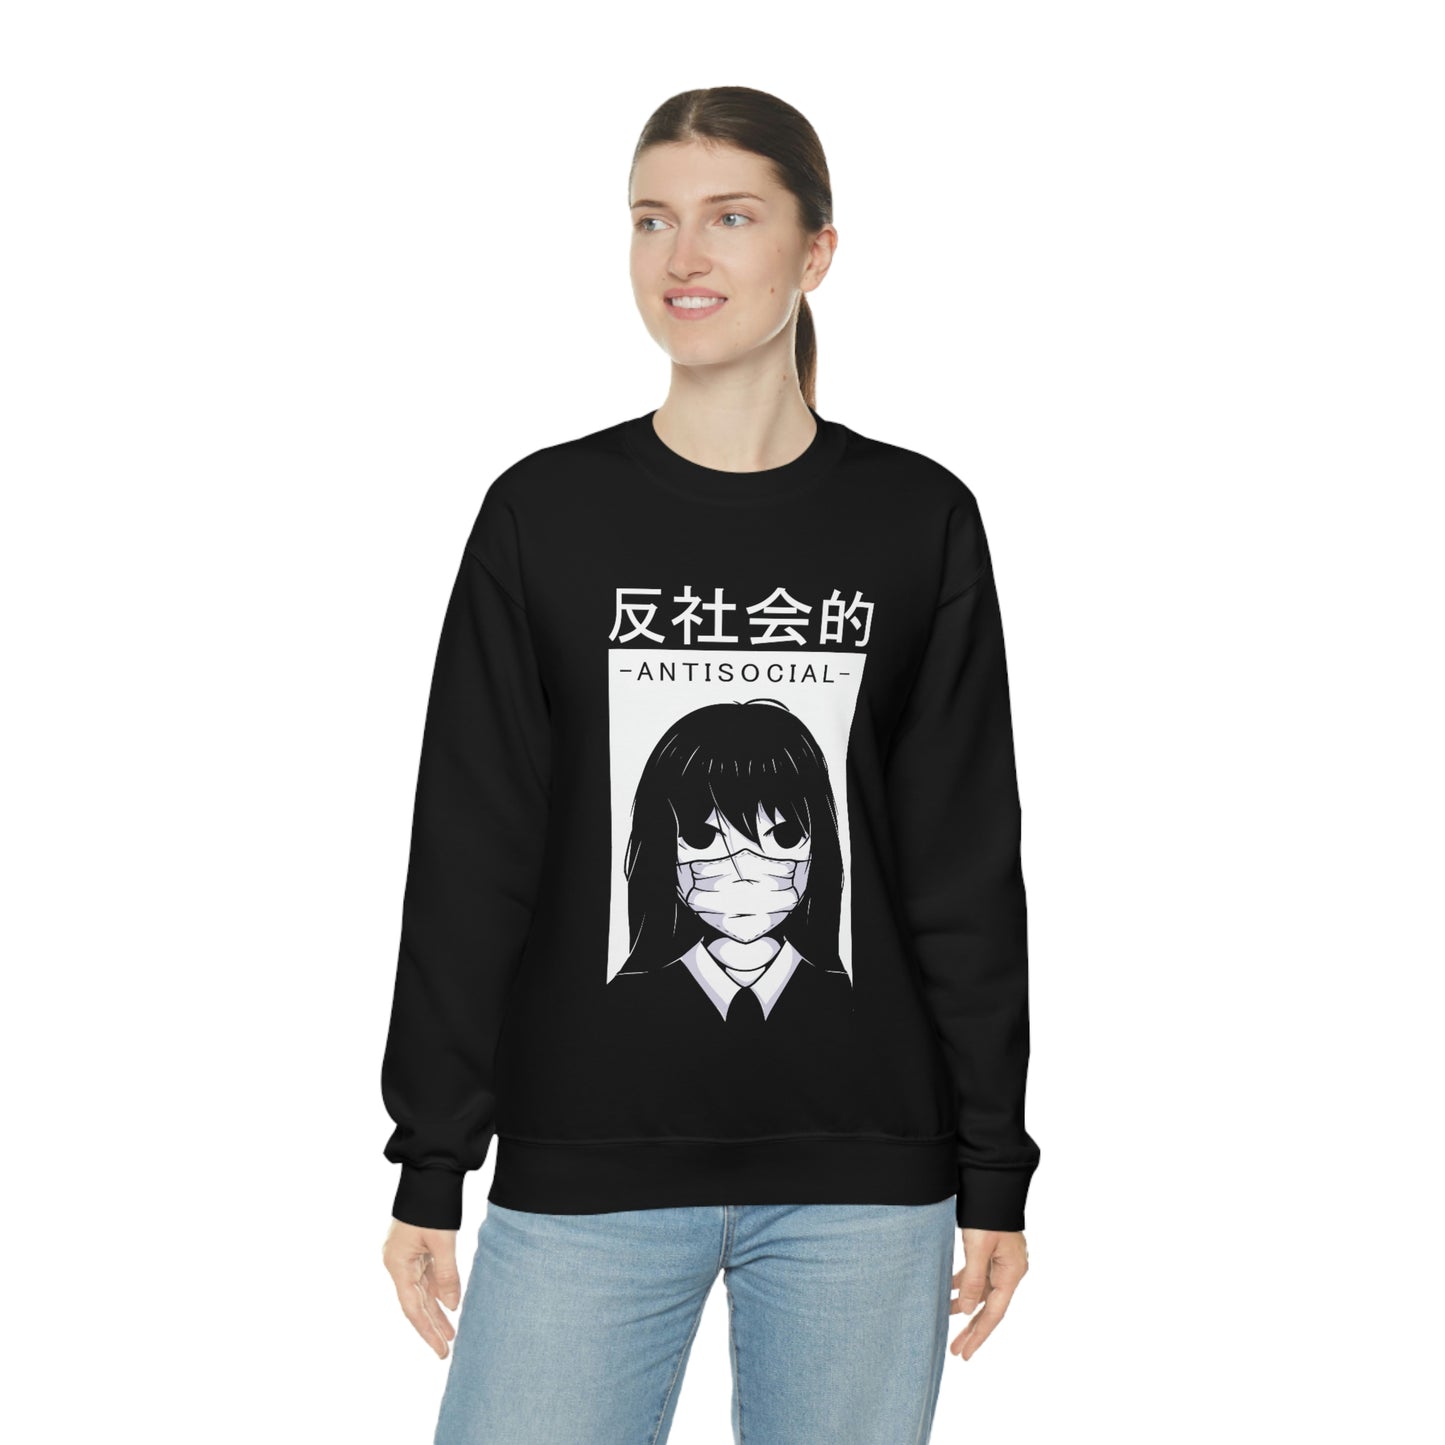 Antisocial, Japanese Aesthetic, Goth Aesthetic Sweatshirt